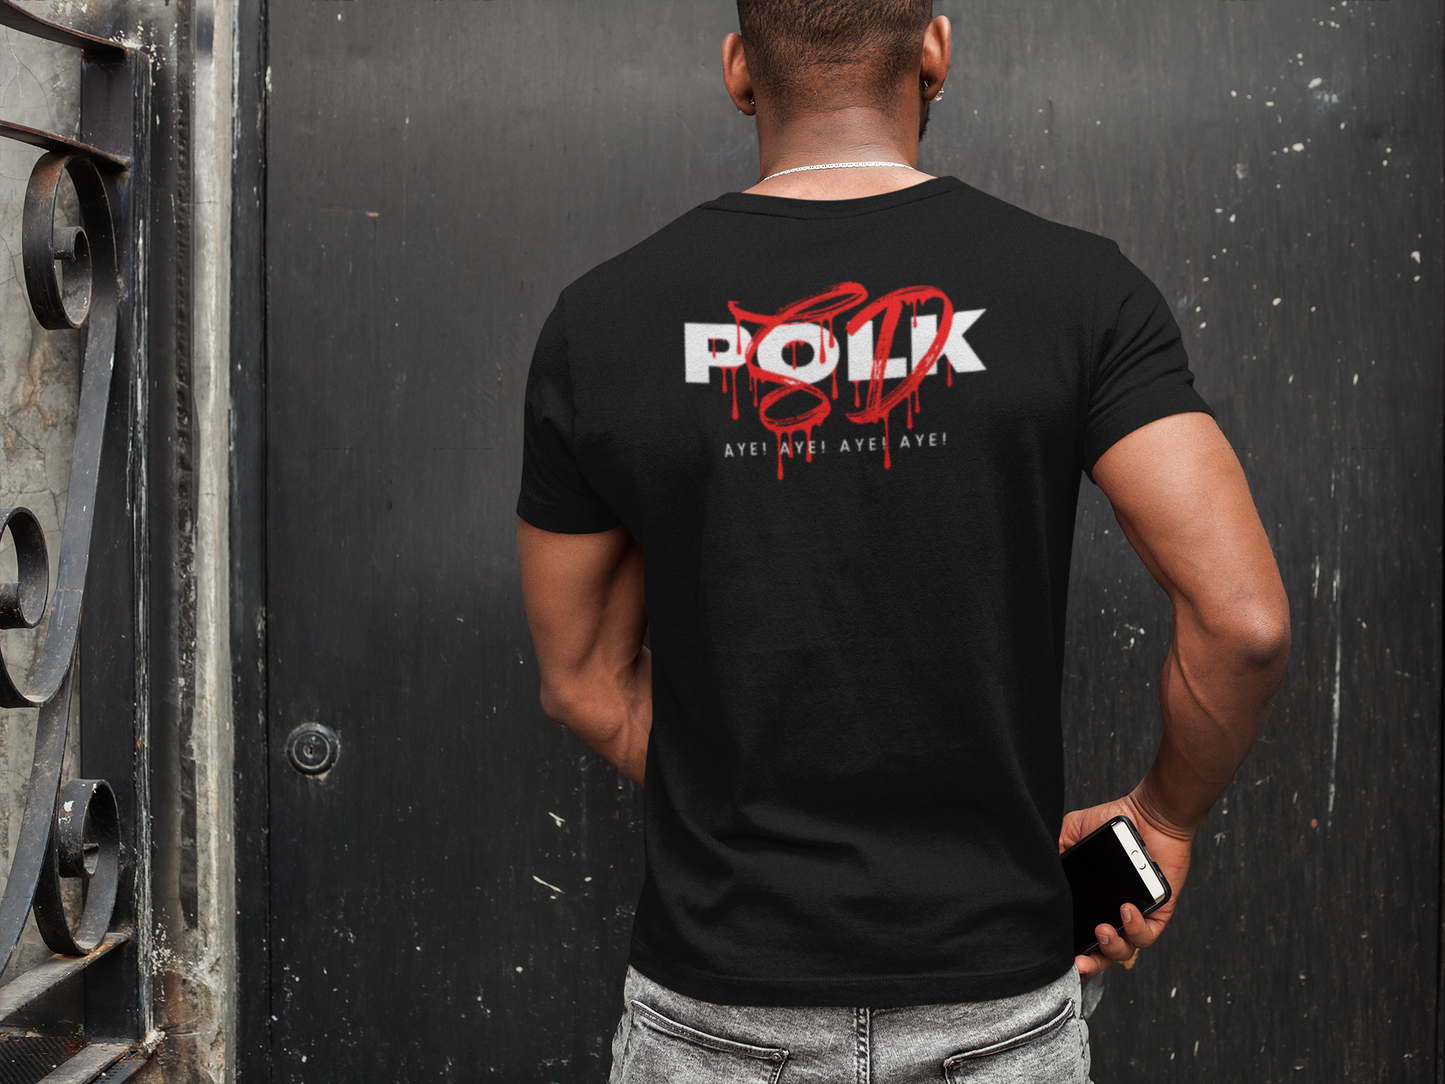 Black polksd shirt